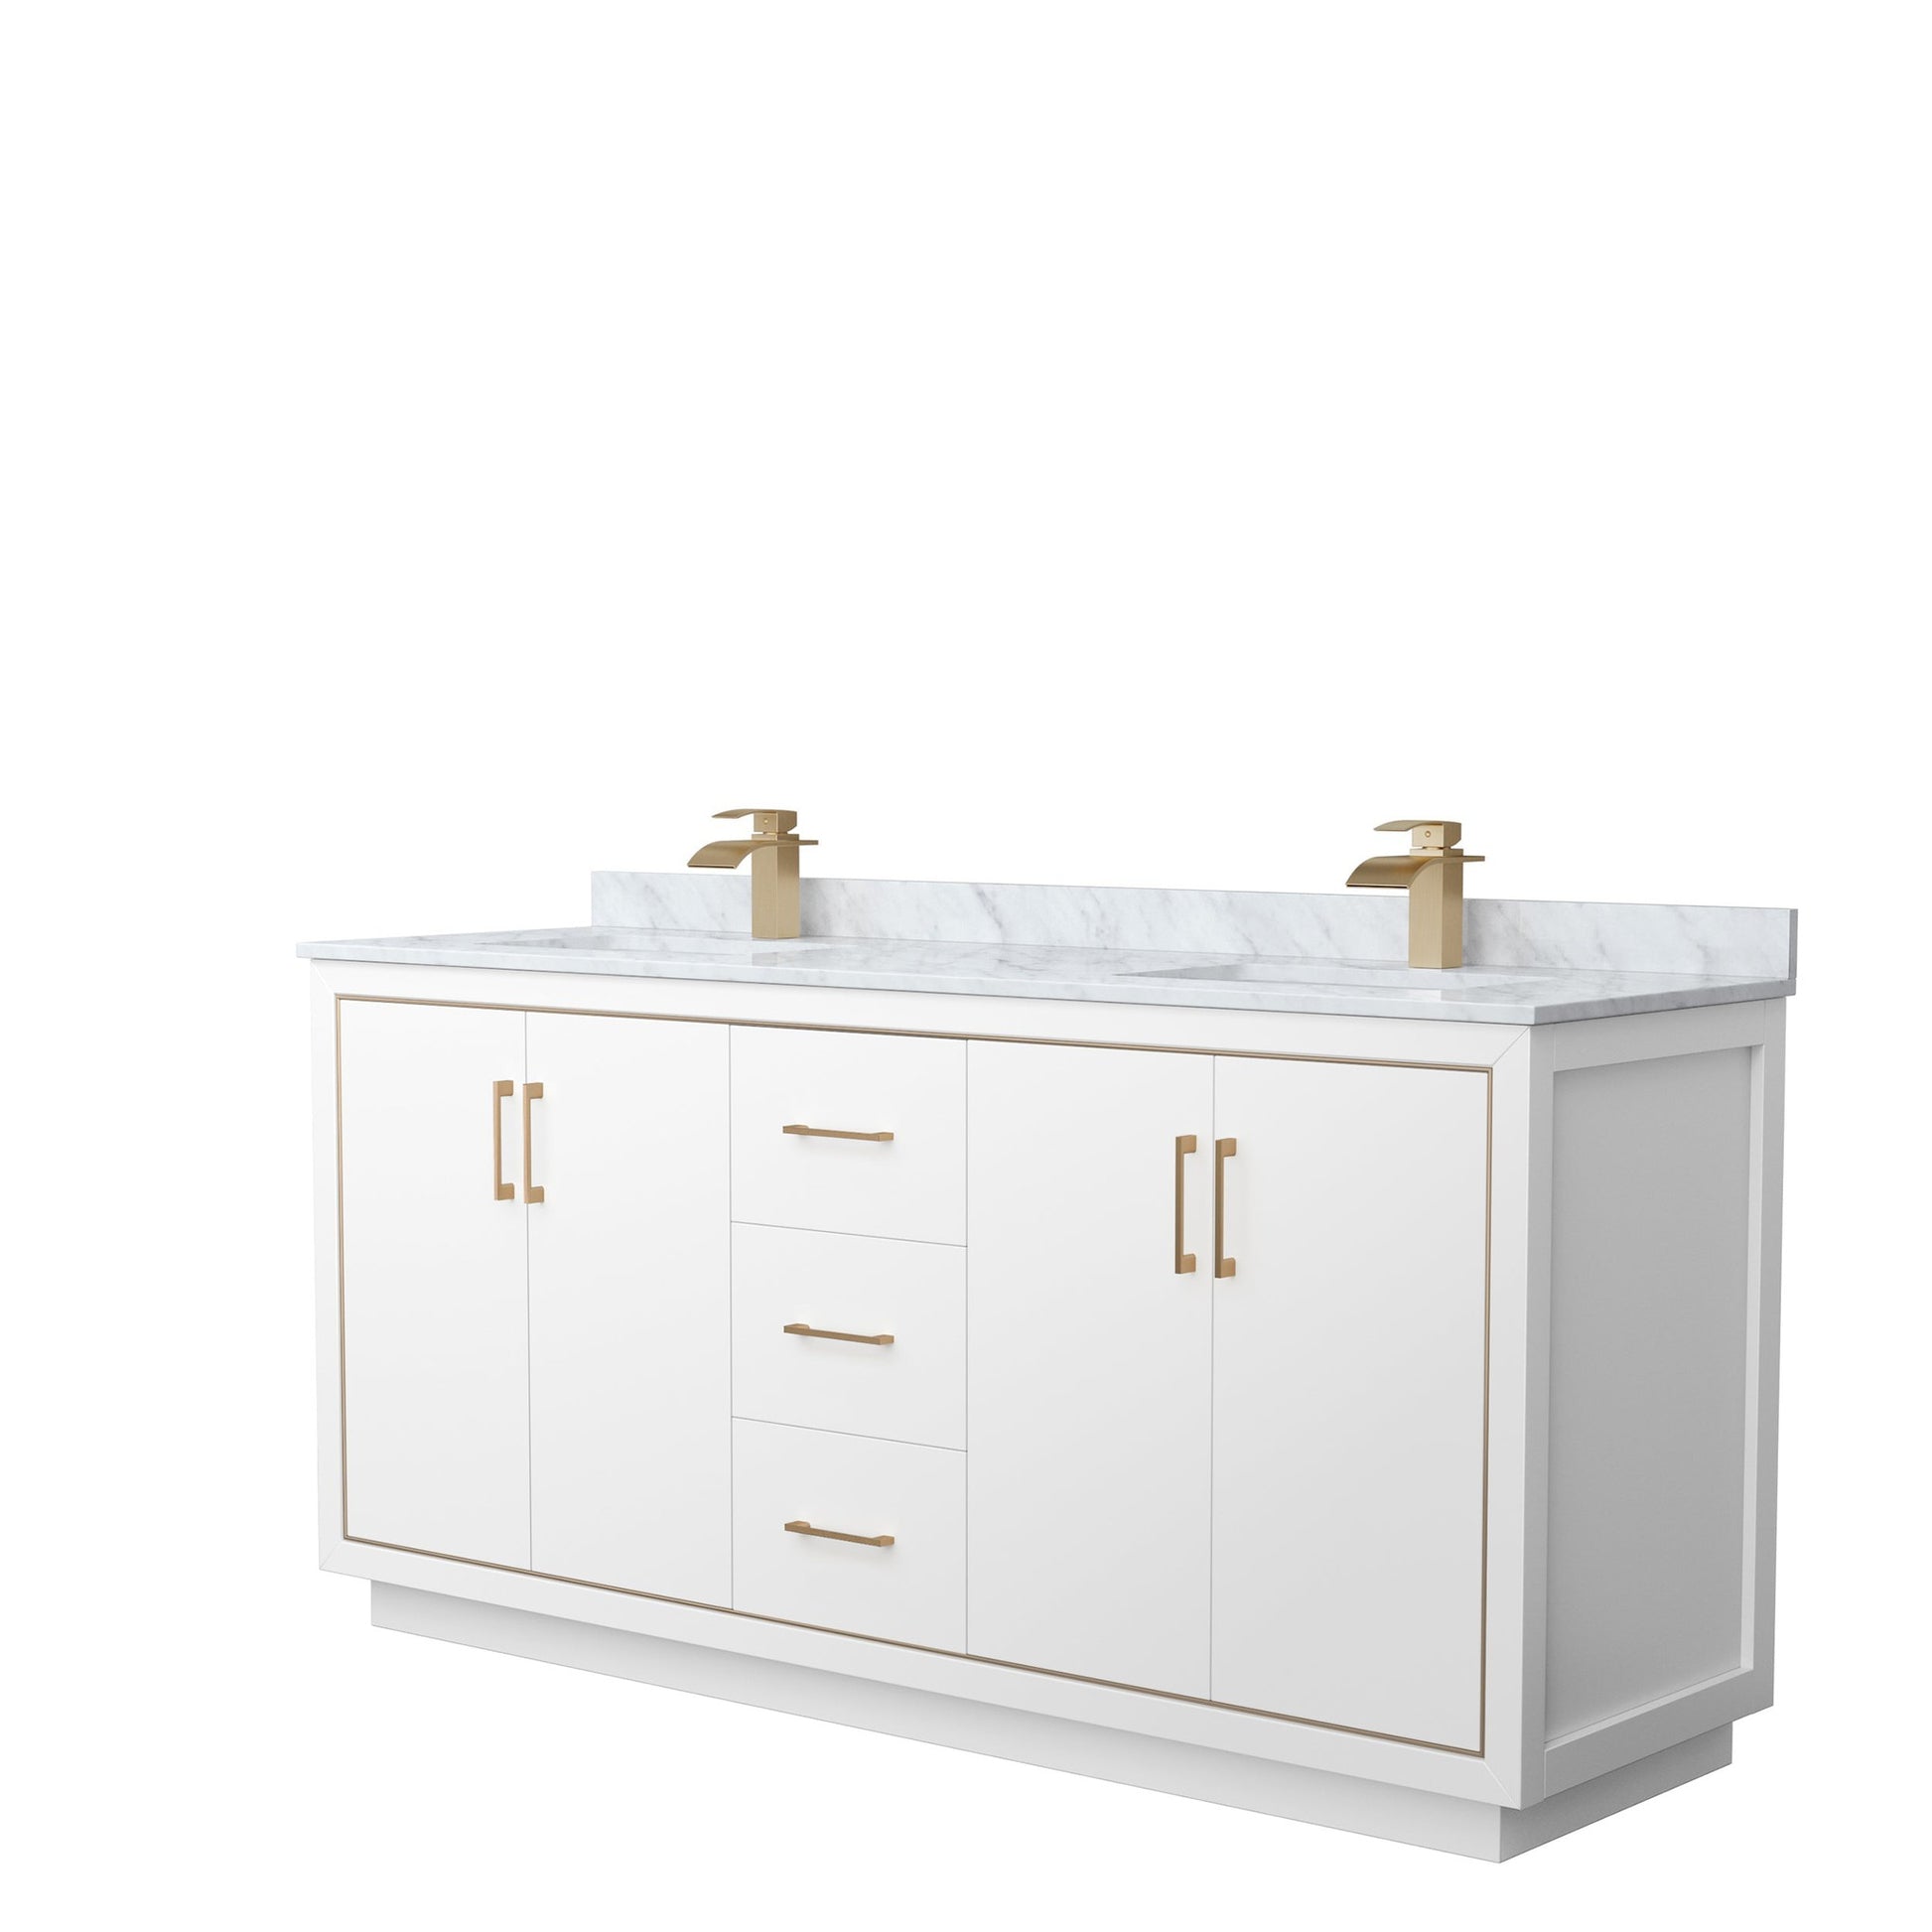 Wyndham Collection Icon 72" Double Bathroom Vanity in White, White Carrara Marble Countertop, Undermount Square Sinks, Satin Bronze Trim